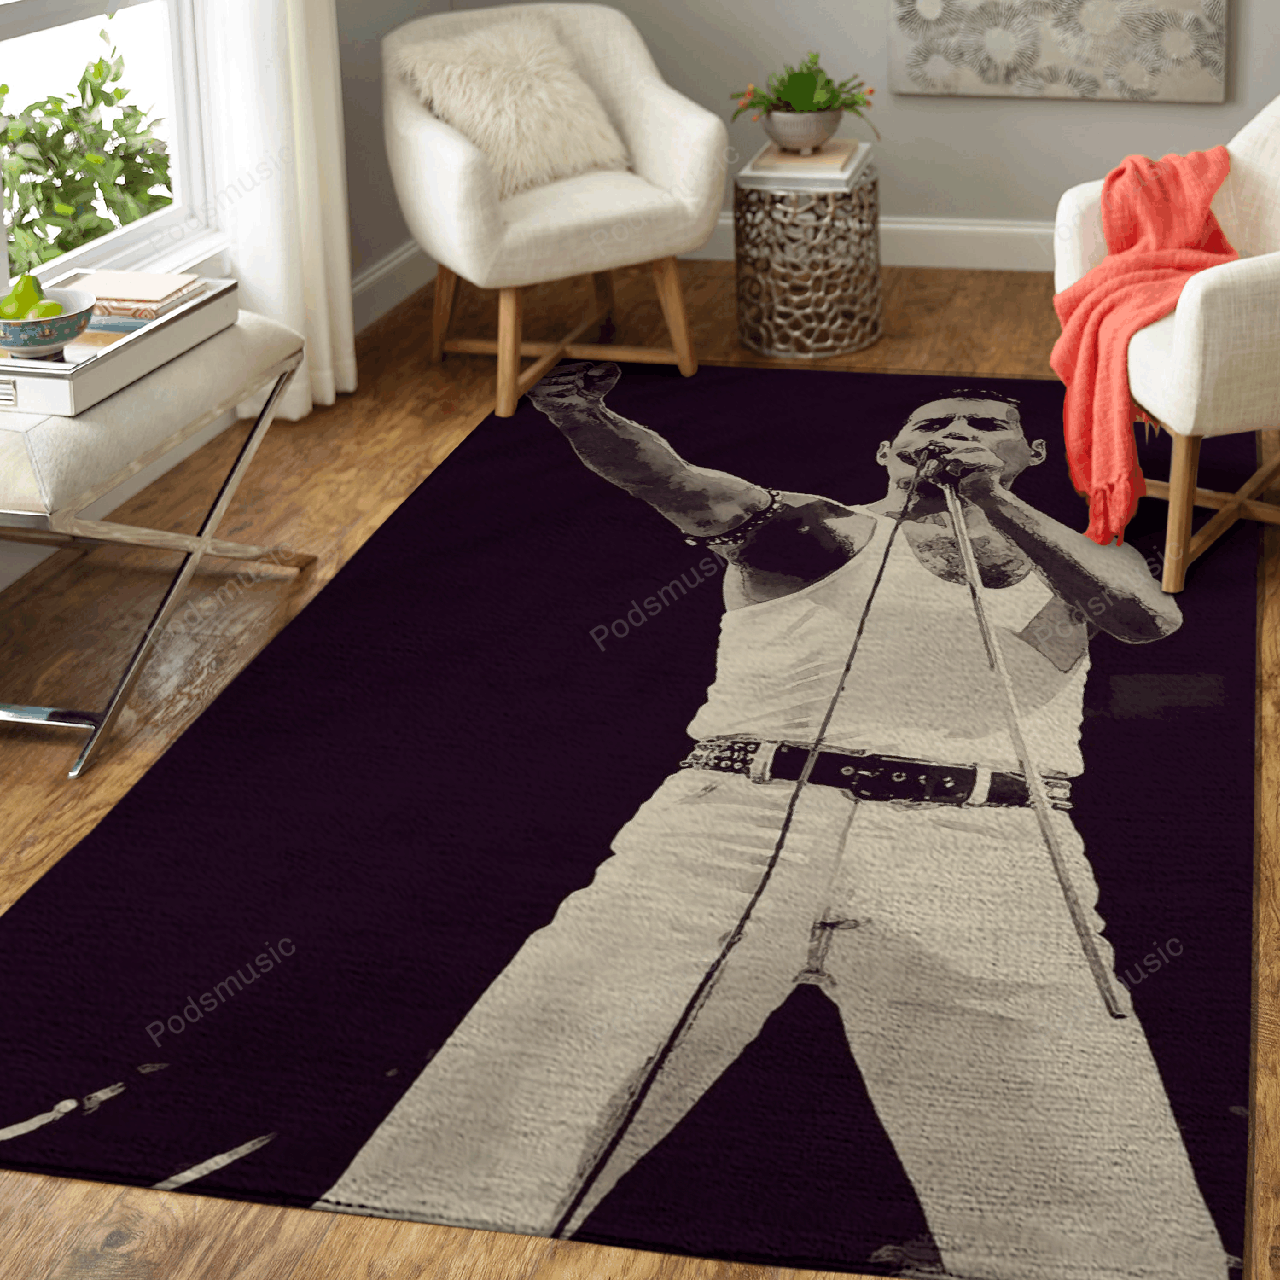 Freddie Mercury 4 – Music Art For Fans Area Rug Carpet